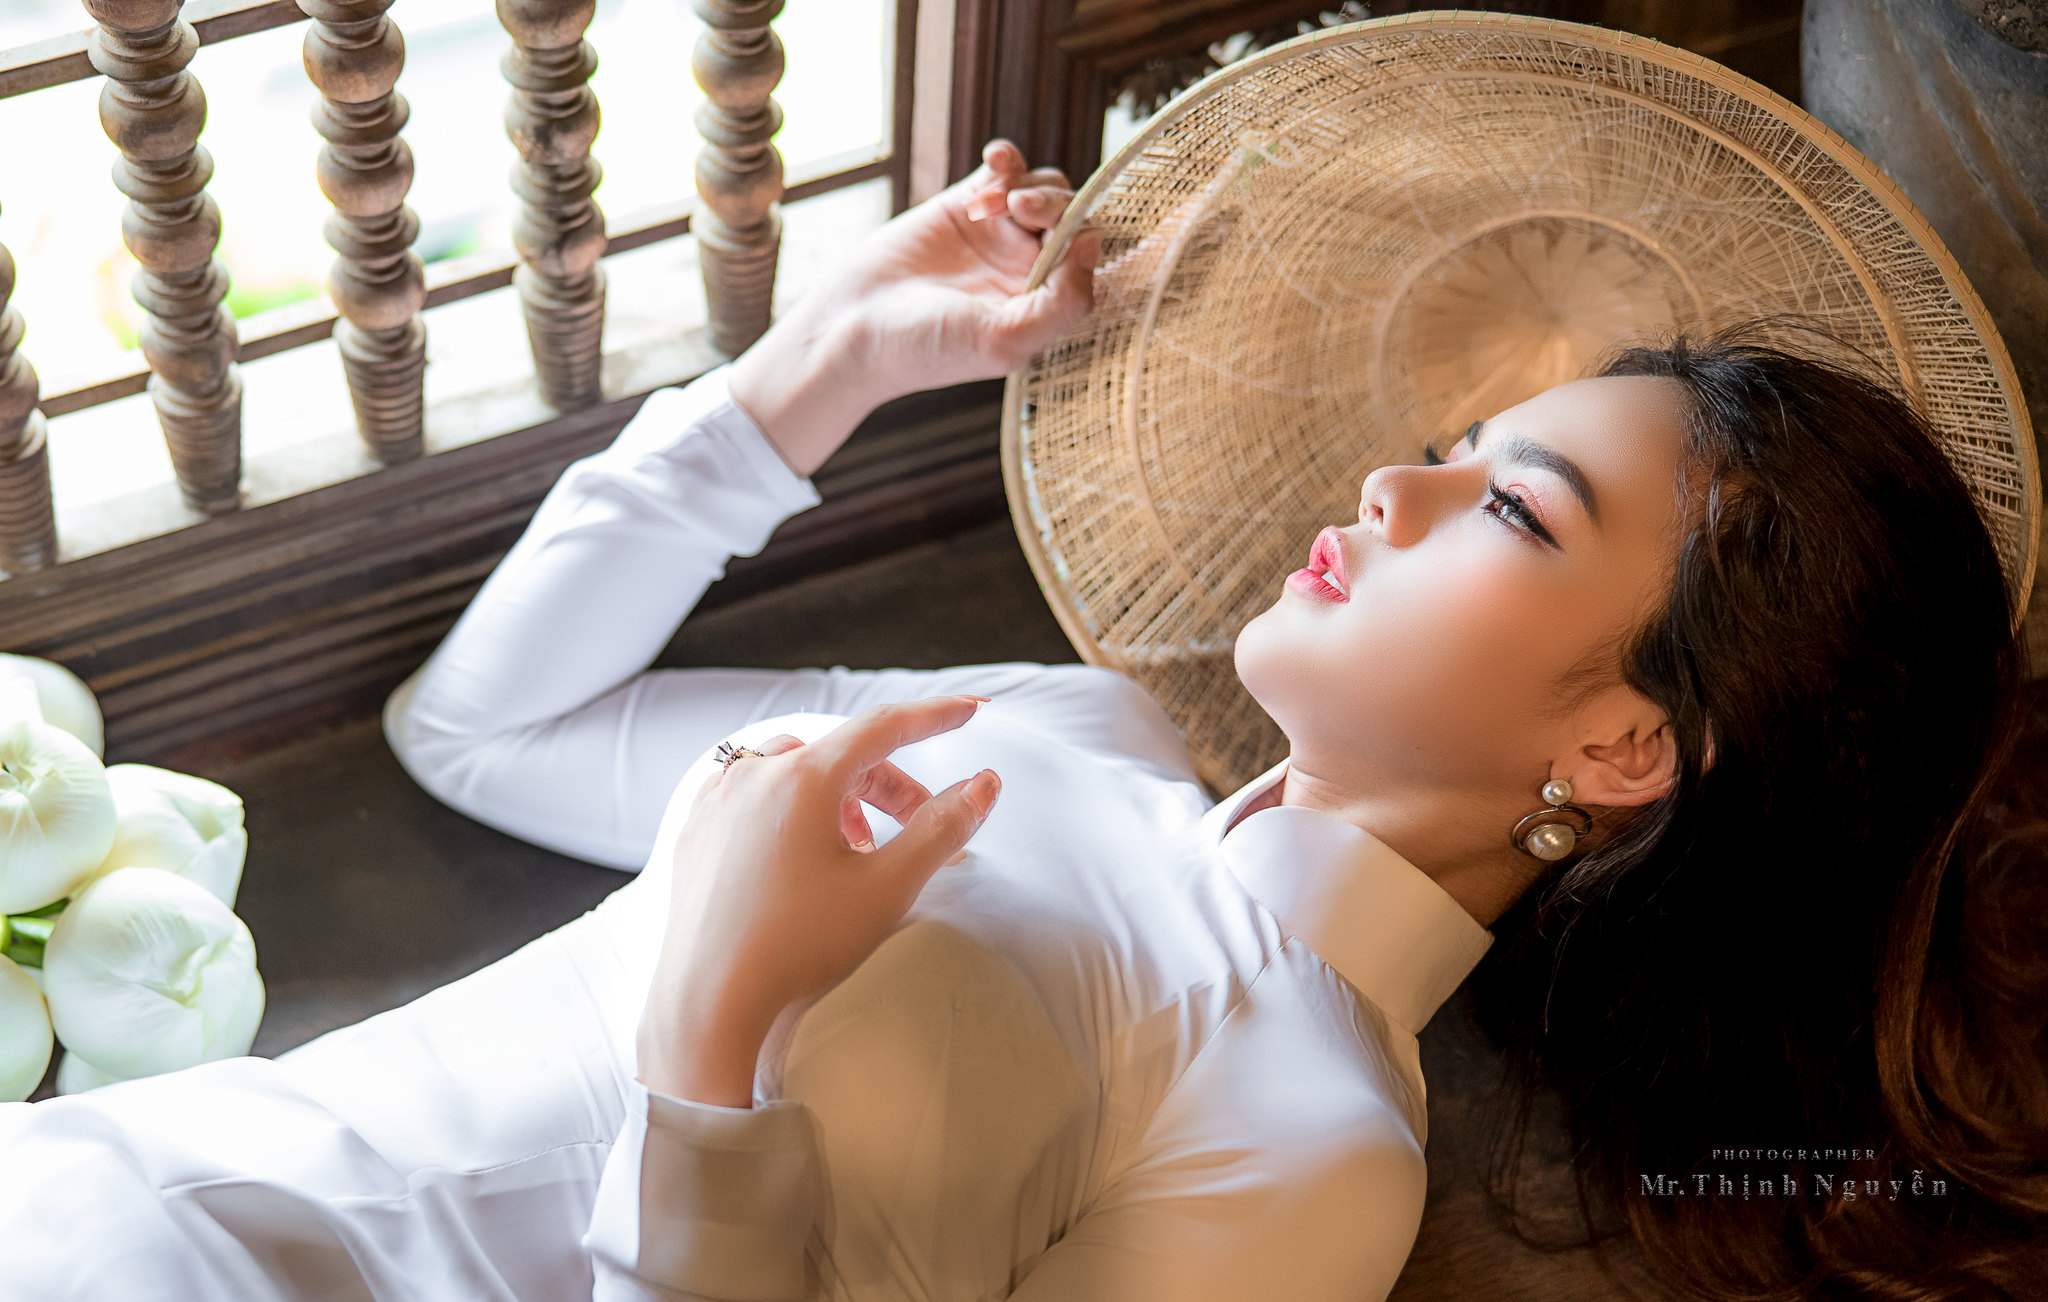 People 2048x1302 Asian model women long hair brunette white dress traditional clothing áo dài Vietnam Vietnamese Vietnam dress